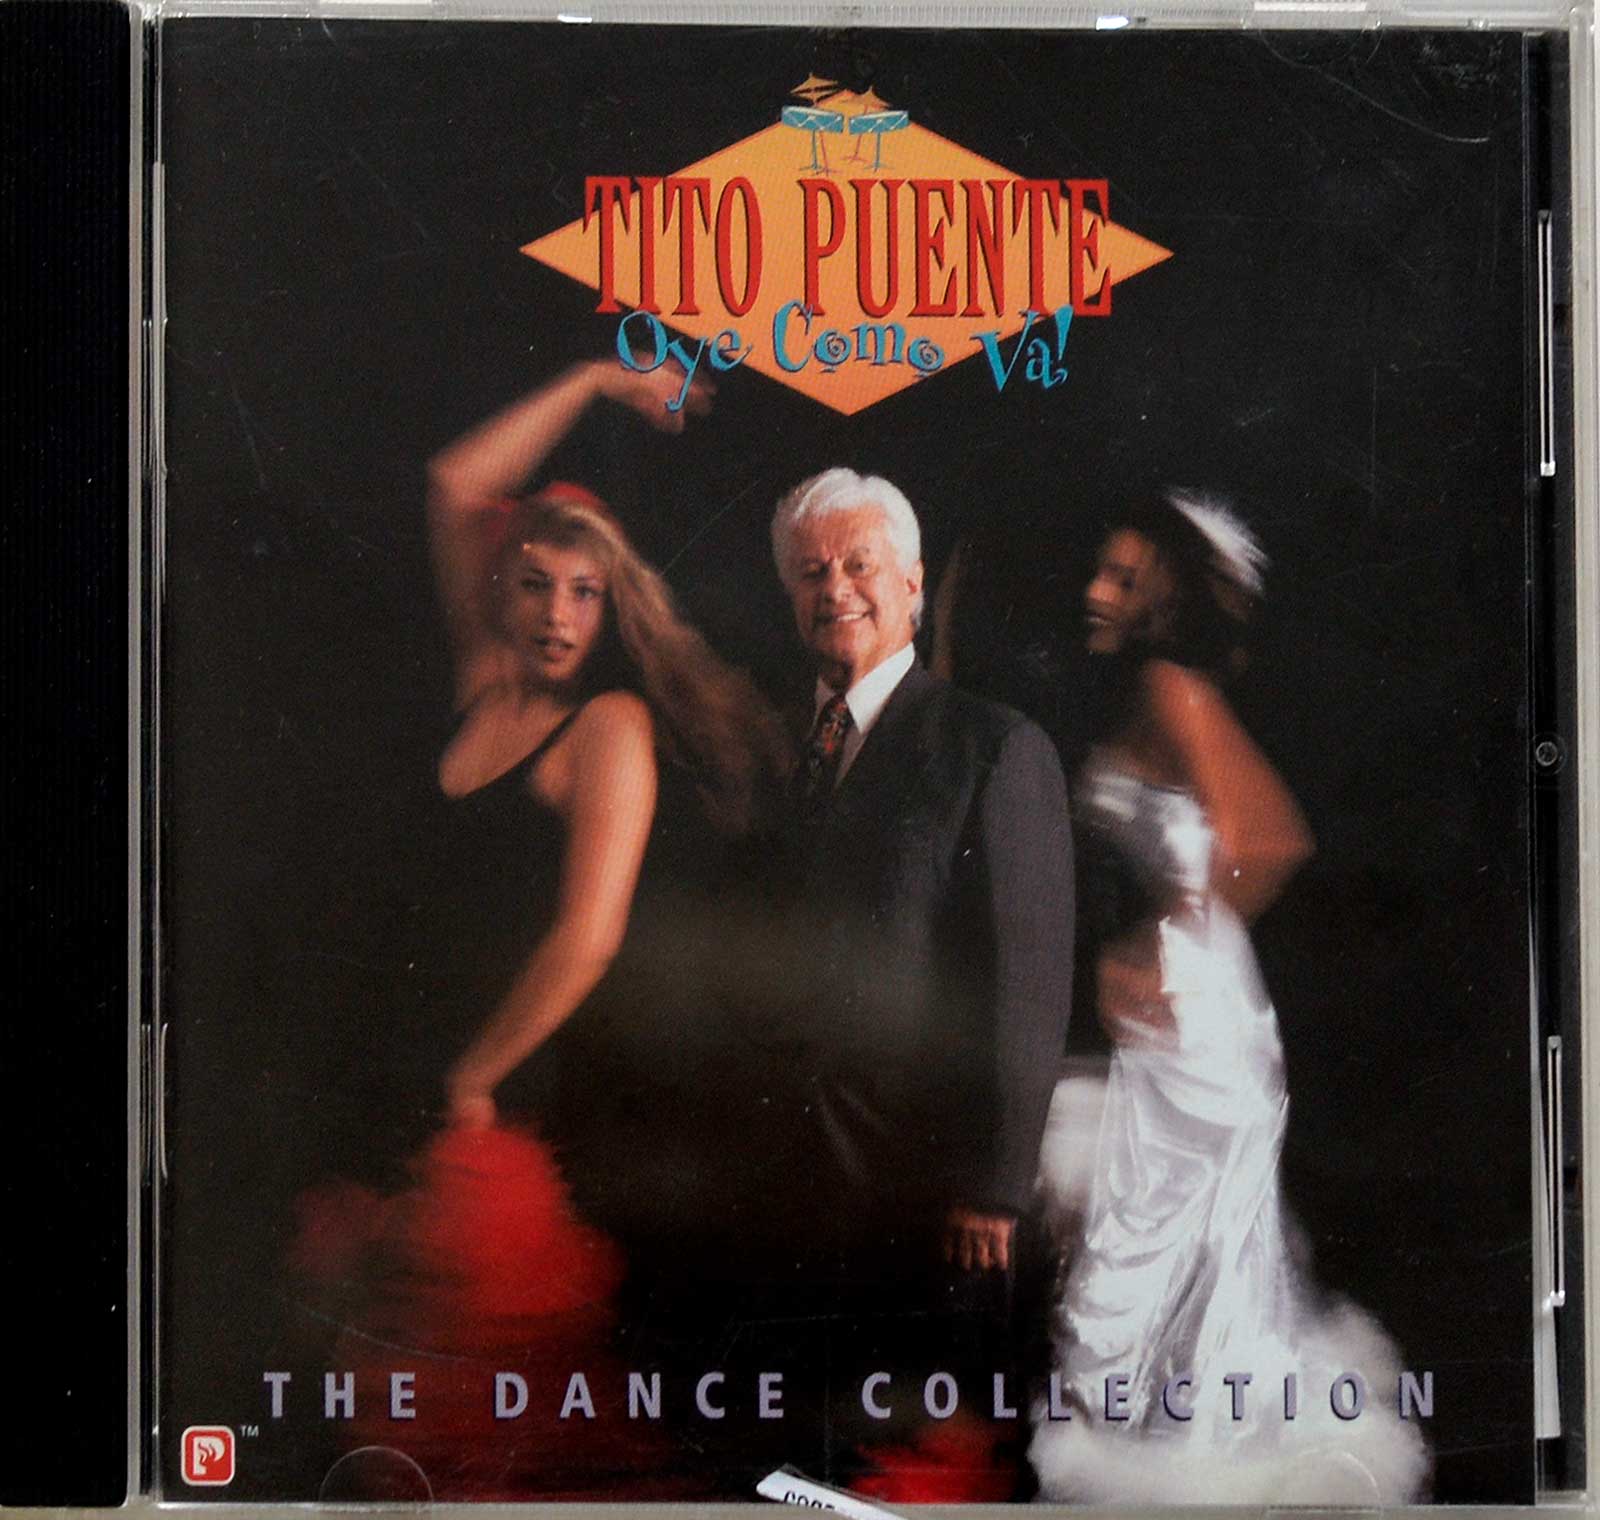 Album Front Cover Photo of TITO PUENTE - Oye Como Va! - The Dance Collection 